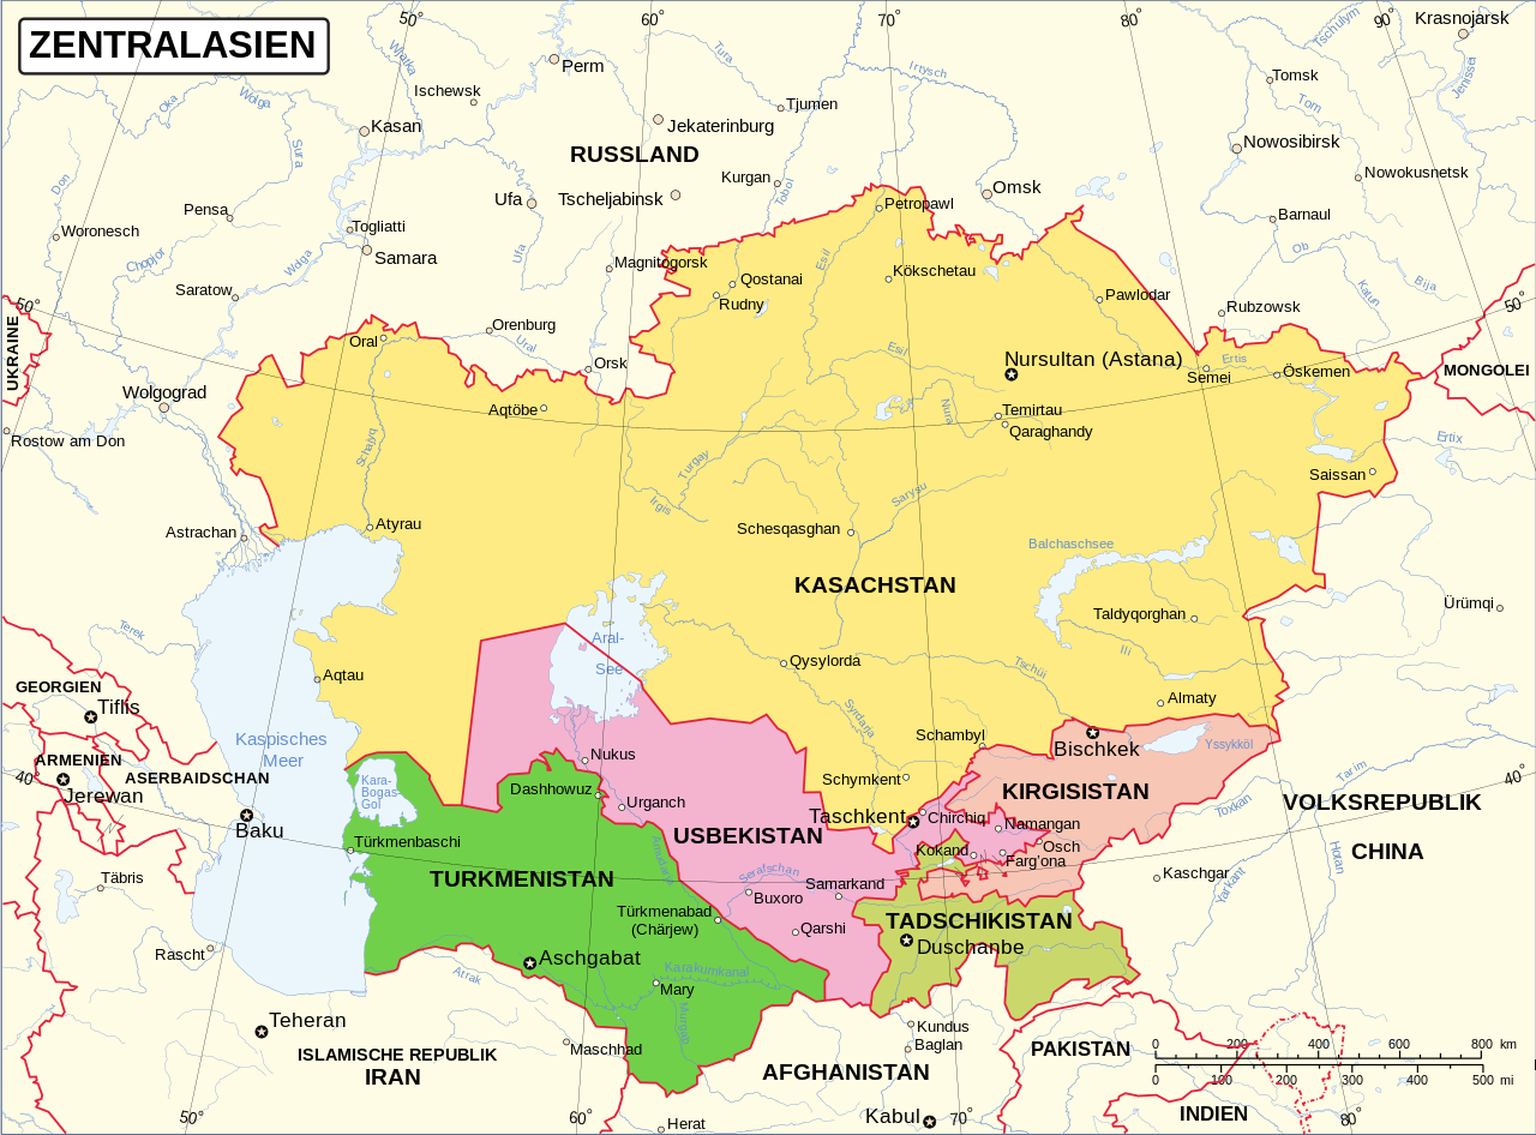 Ehemals sowjetisches Zentralasien (politisch), 2010
https://commons.wikimedia.org/w/index.php?curid=36943679